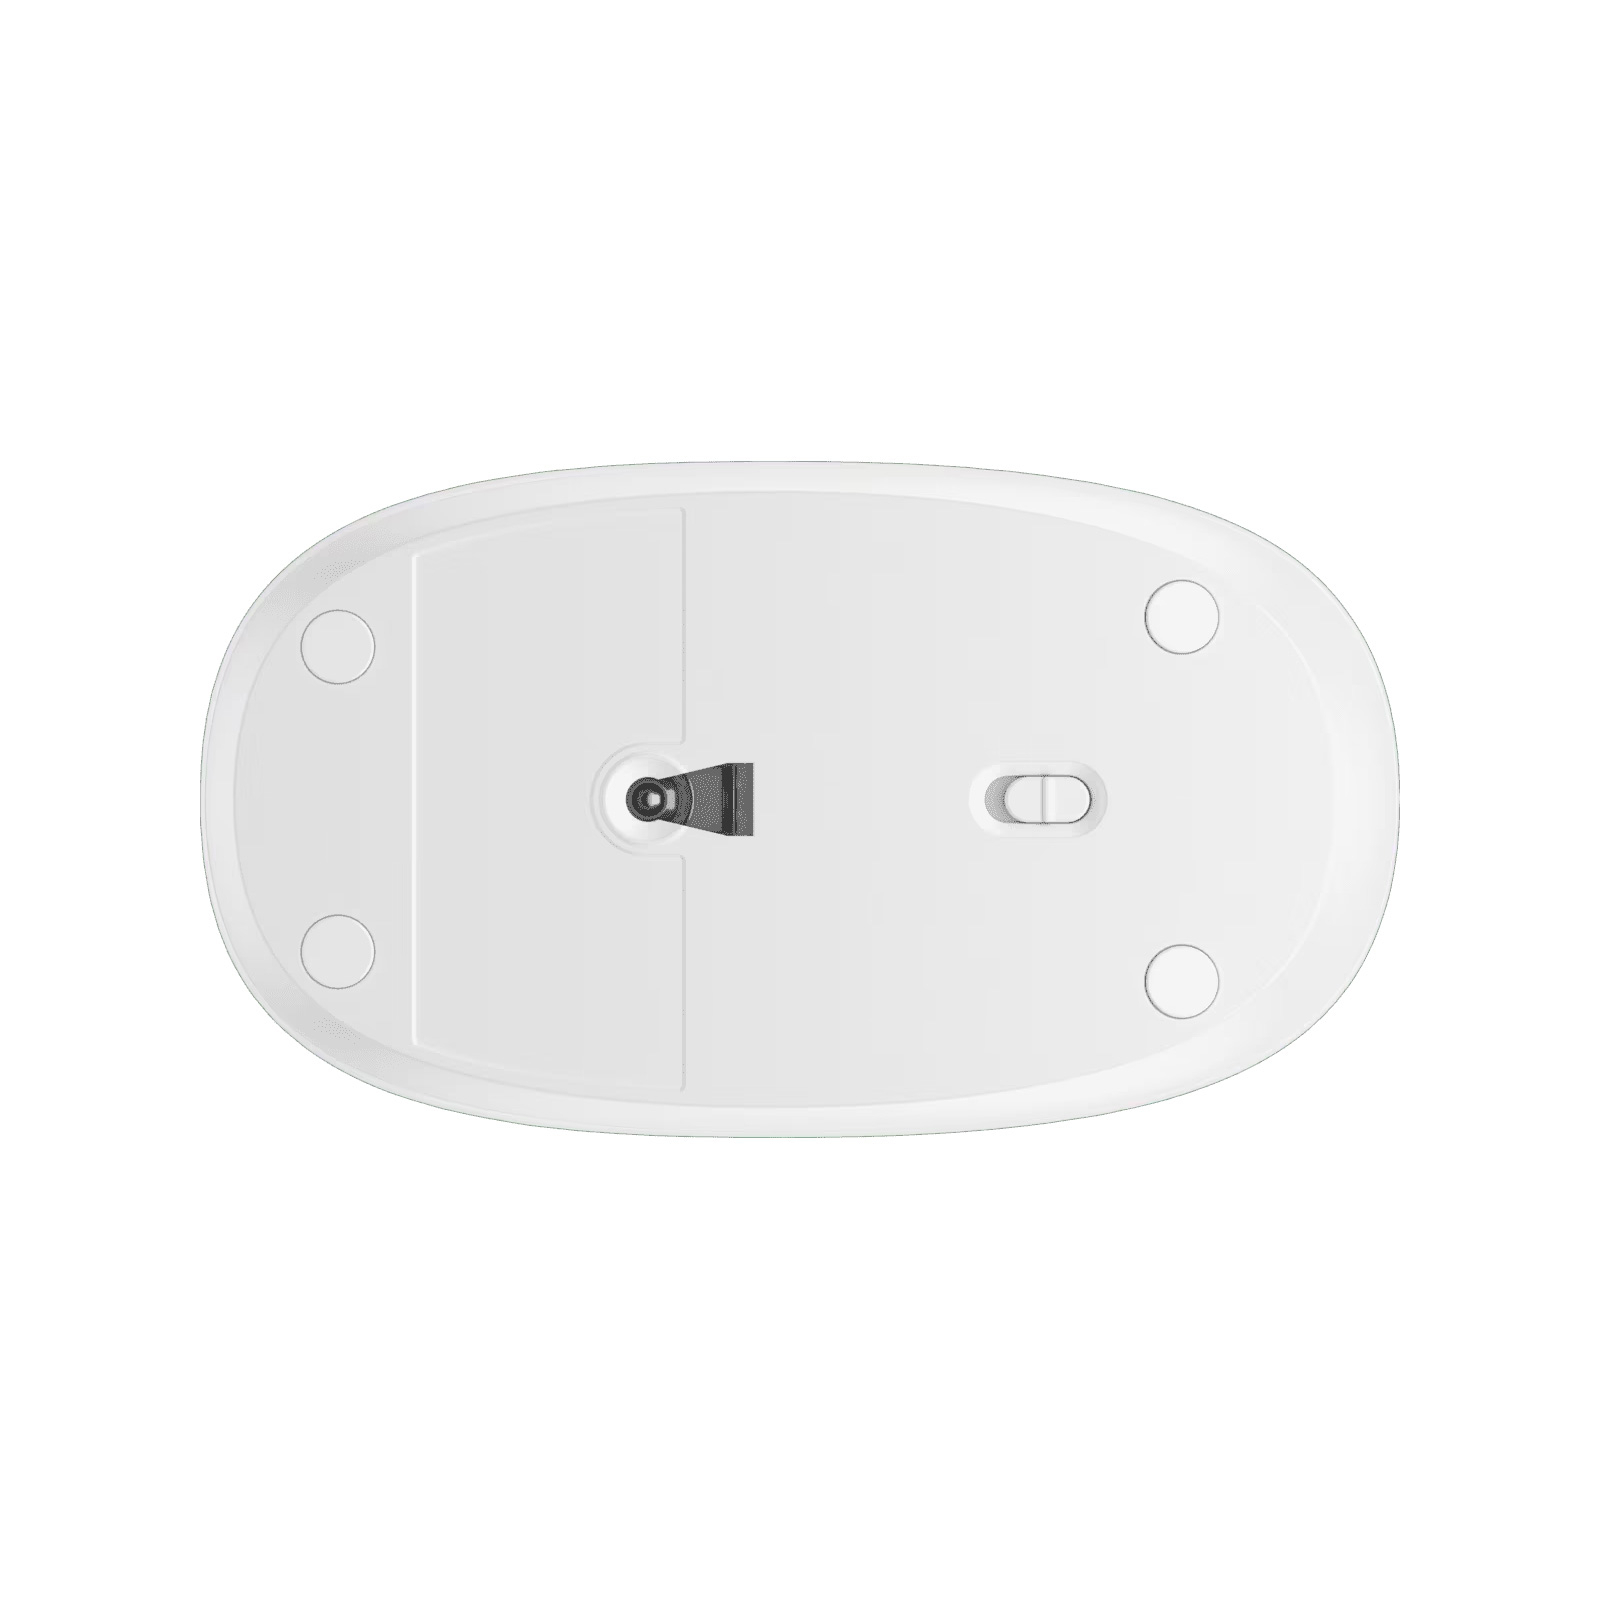 Мышка HP 240 Bluetooth Silver (43N04AA) изображение 6